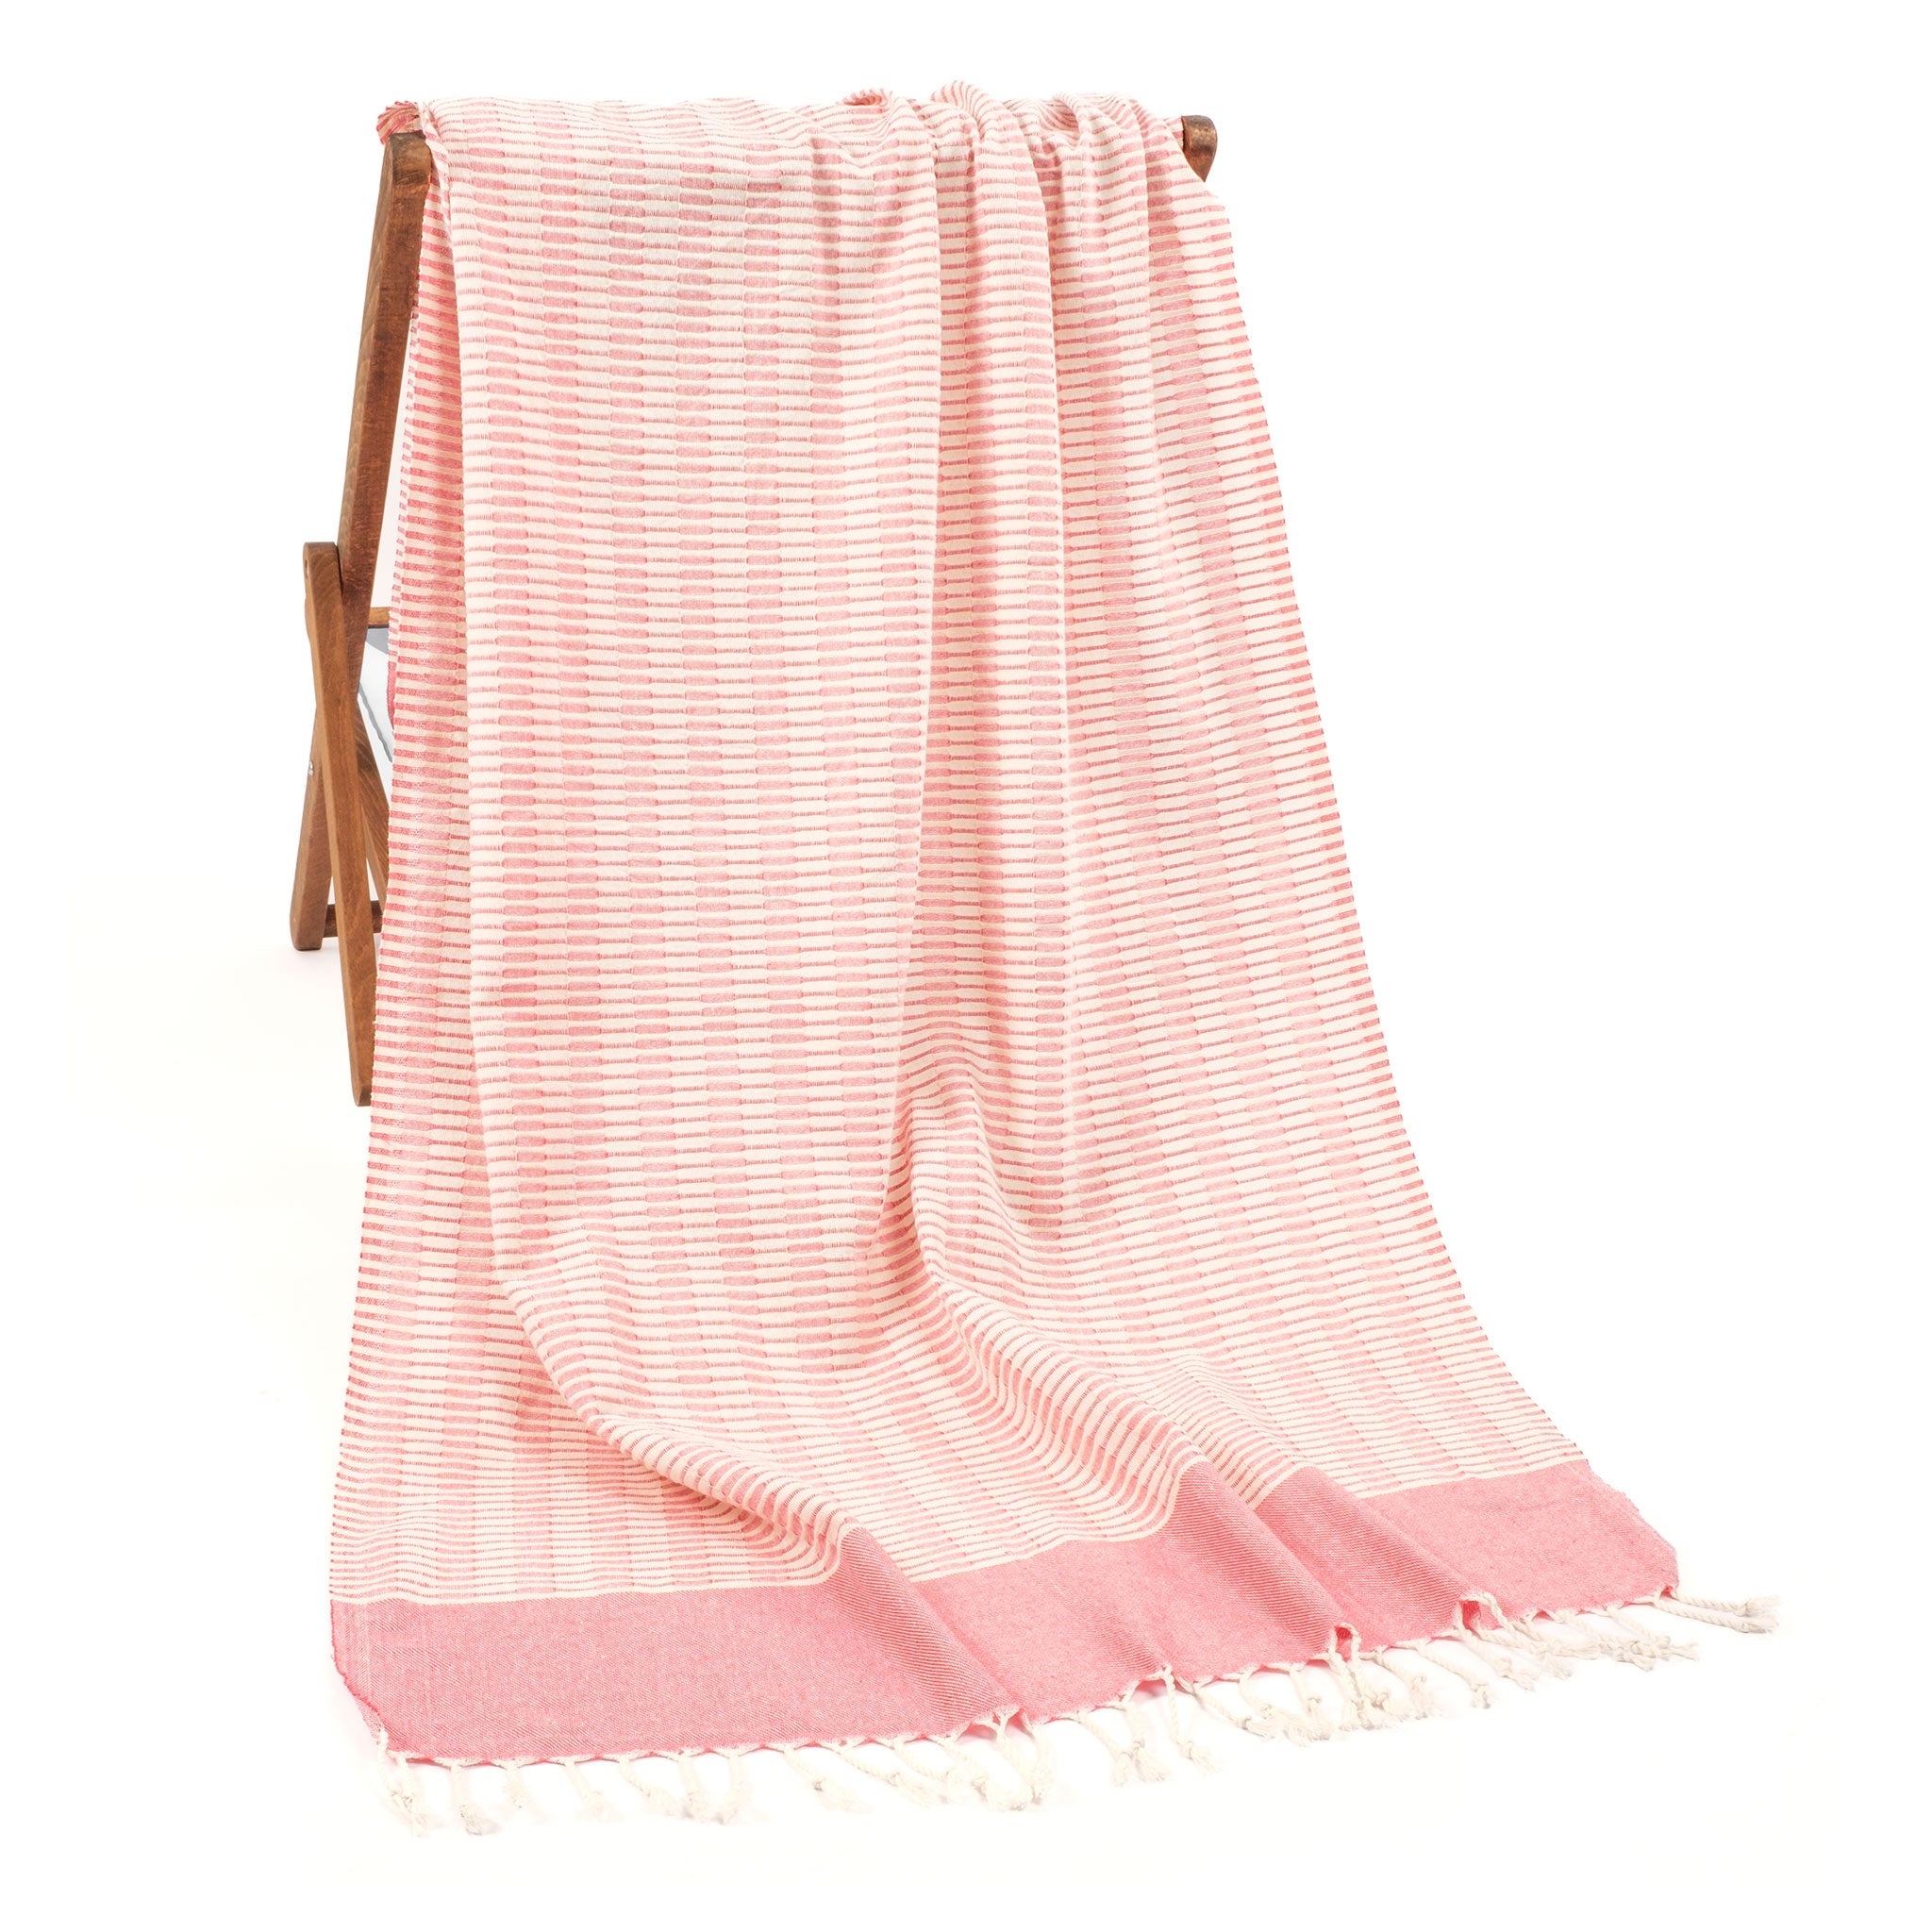 American Soft Linen - 100% Cotton Turkish Peshtemal Towels - 44 Set Case Pack - Coral - 1